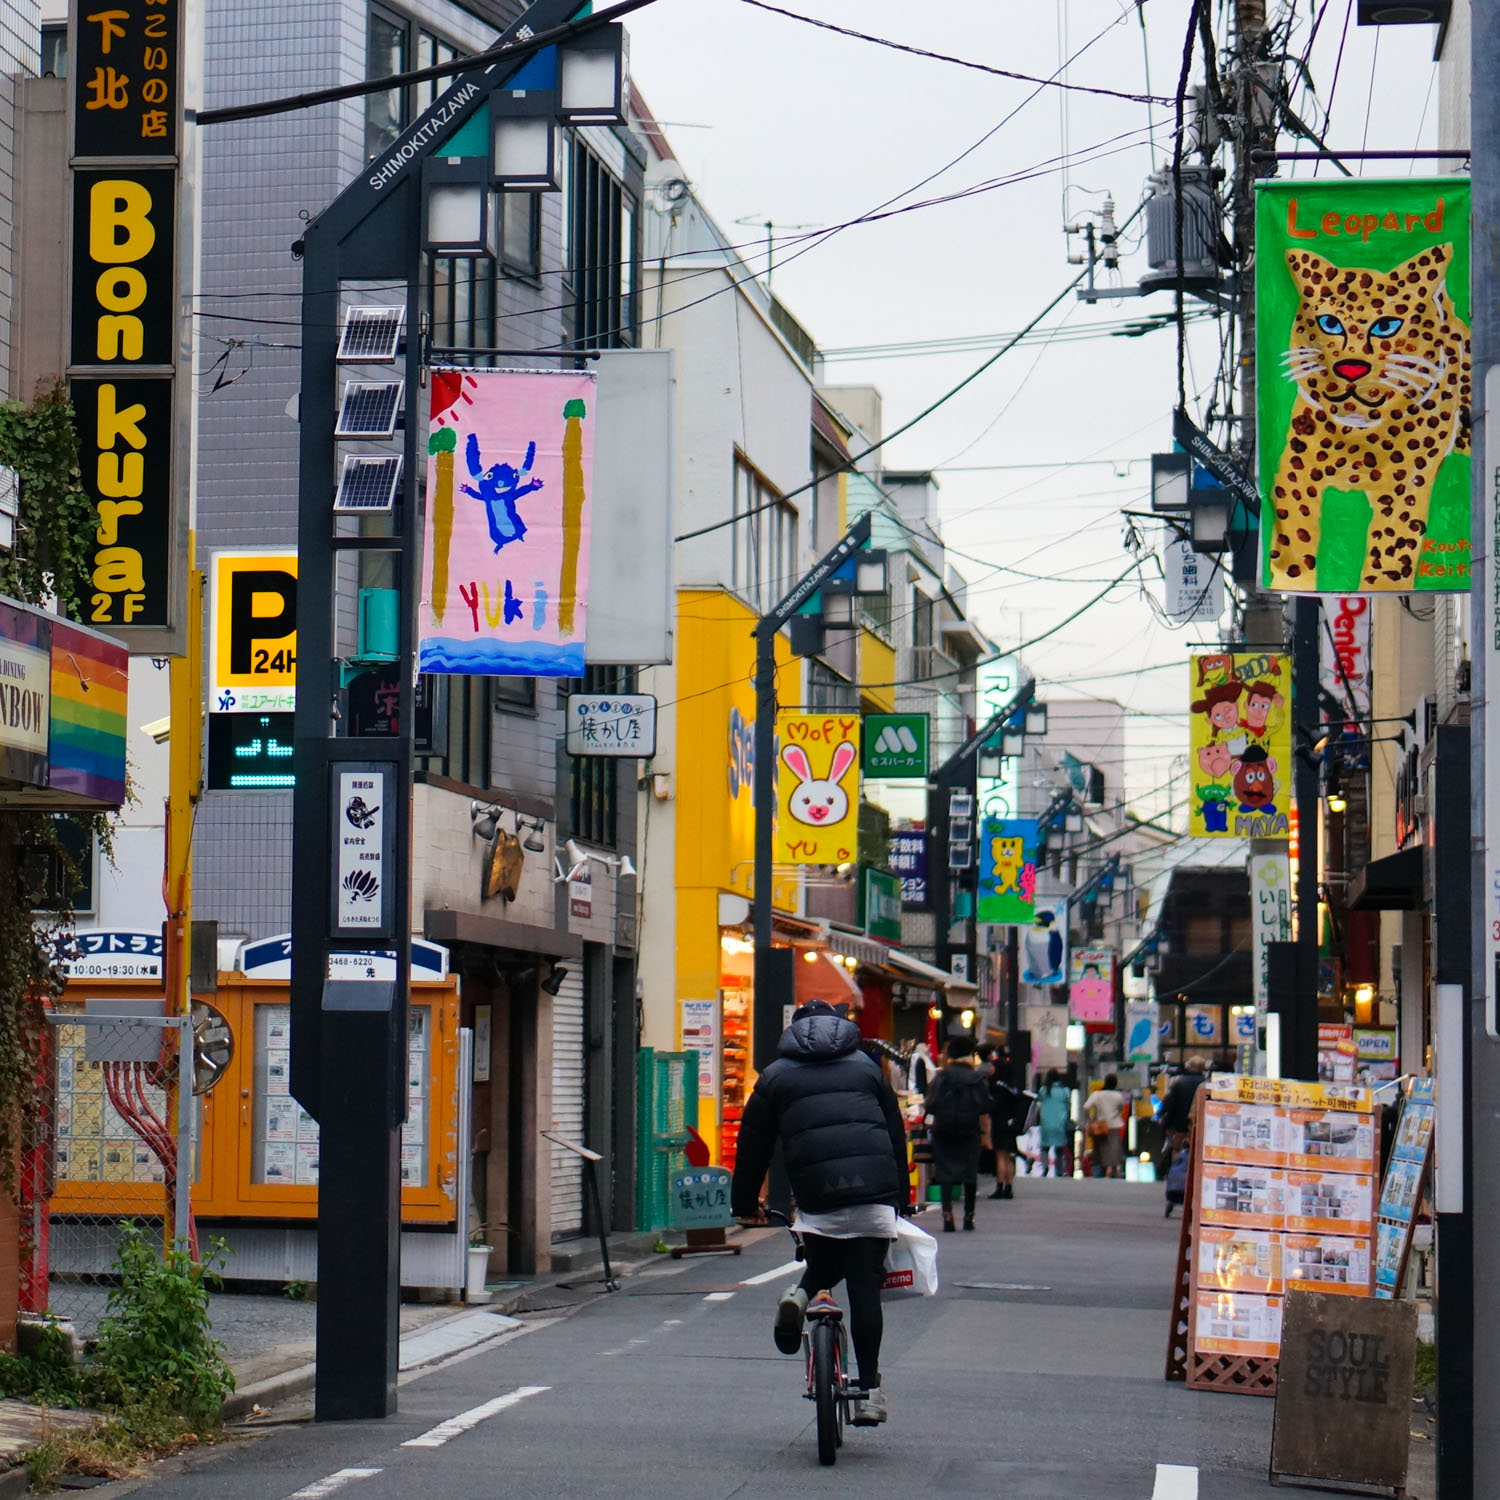 shimokitazawa, tokyo city guide, voyage à tokyo, tourisme à tokyo, voyage tokyo, voyage japon